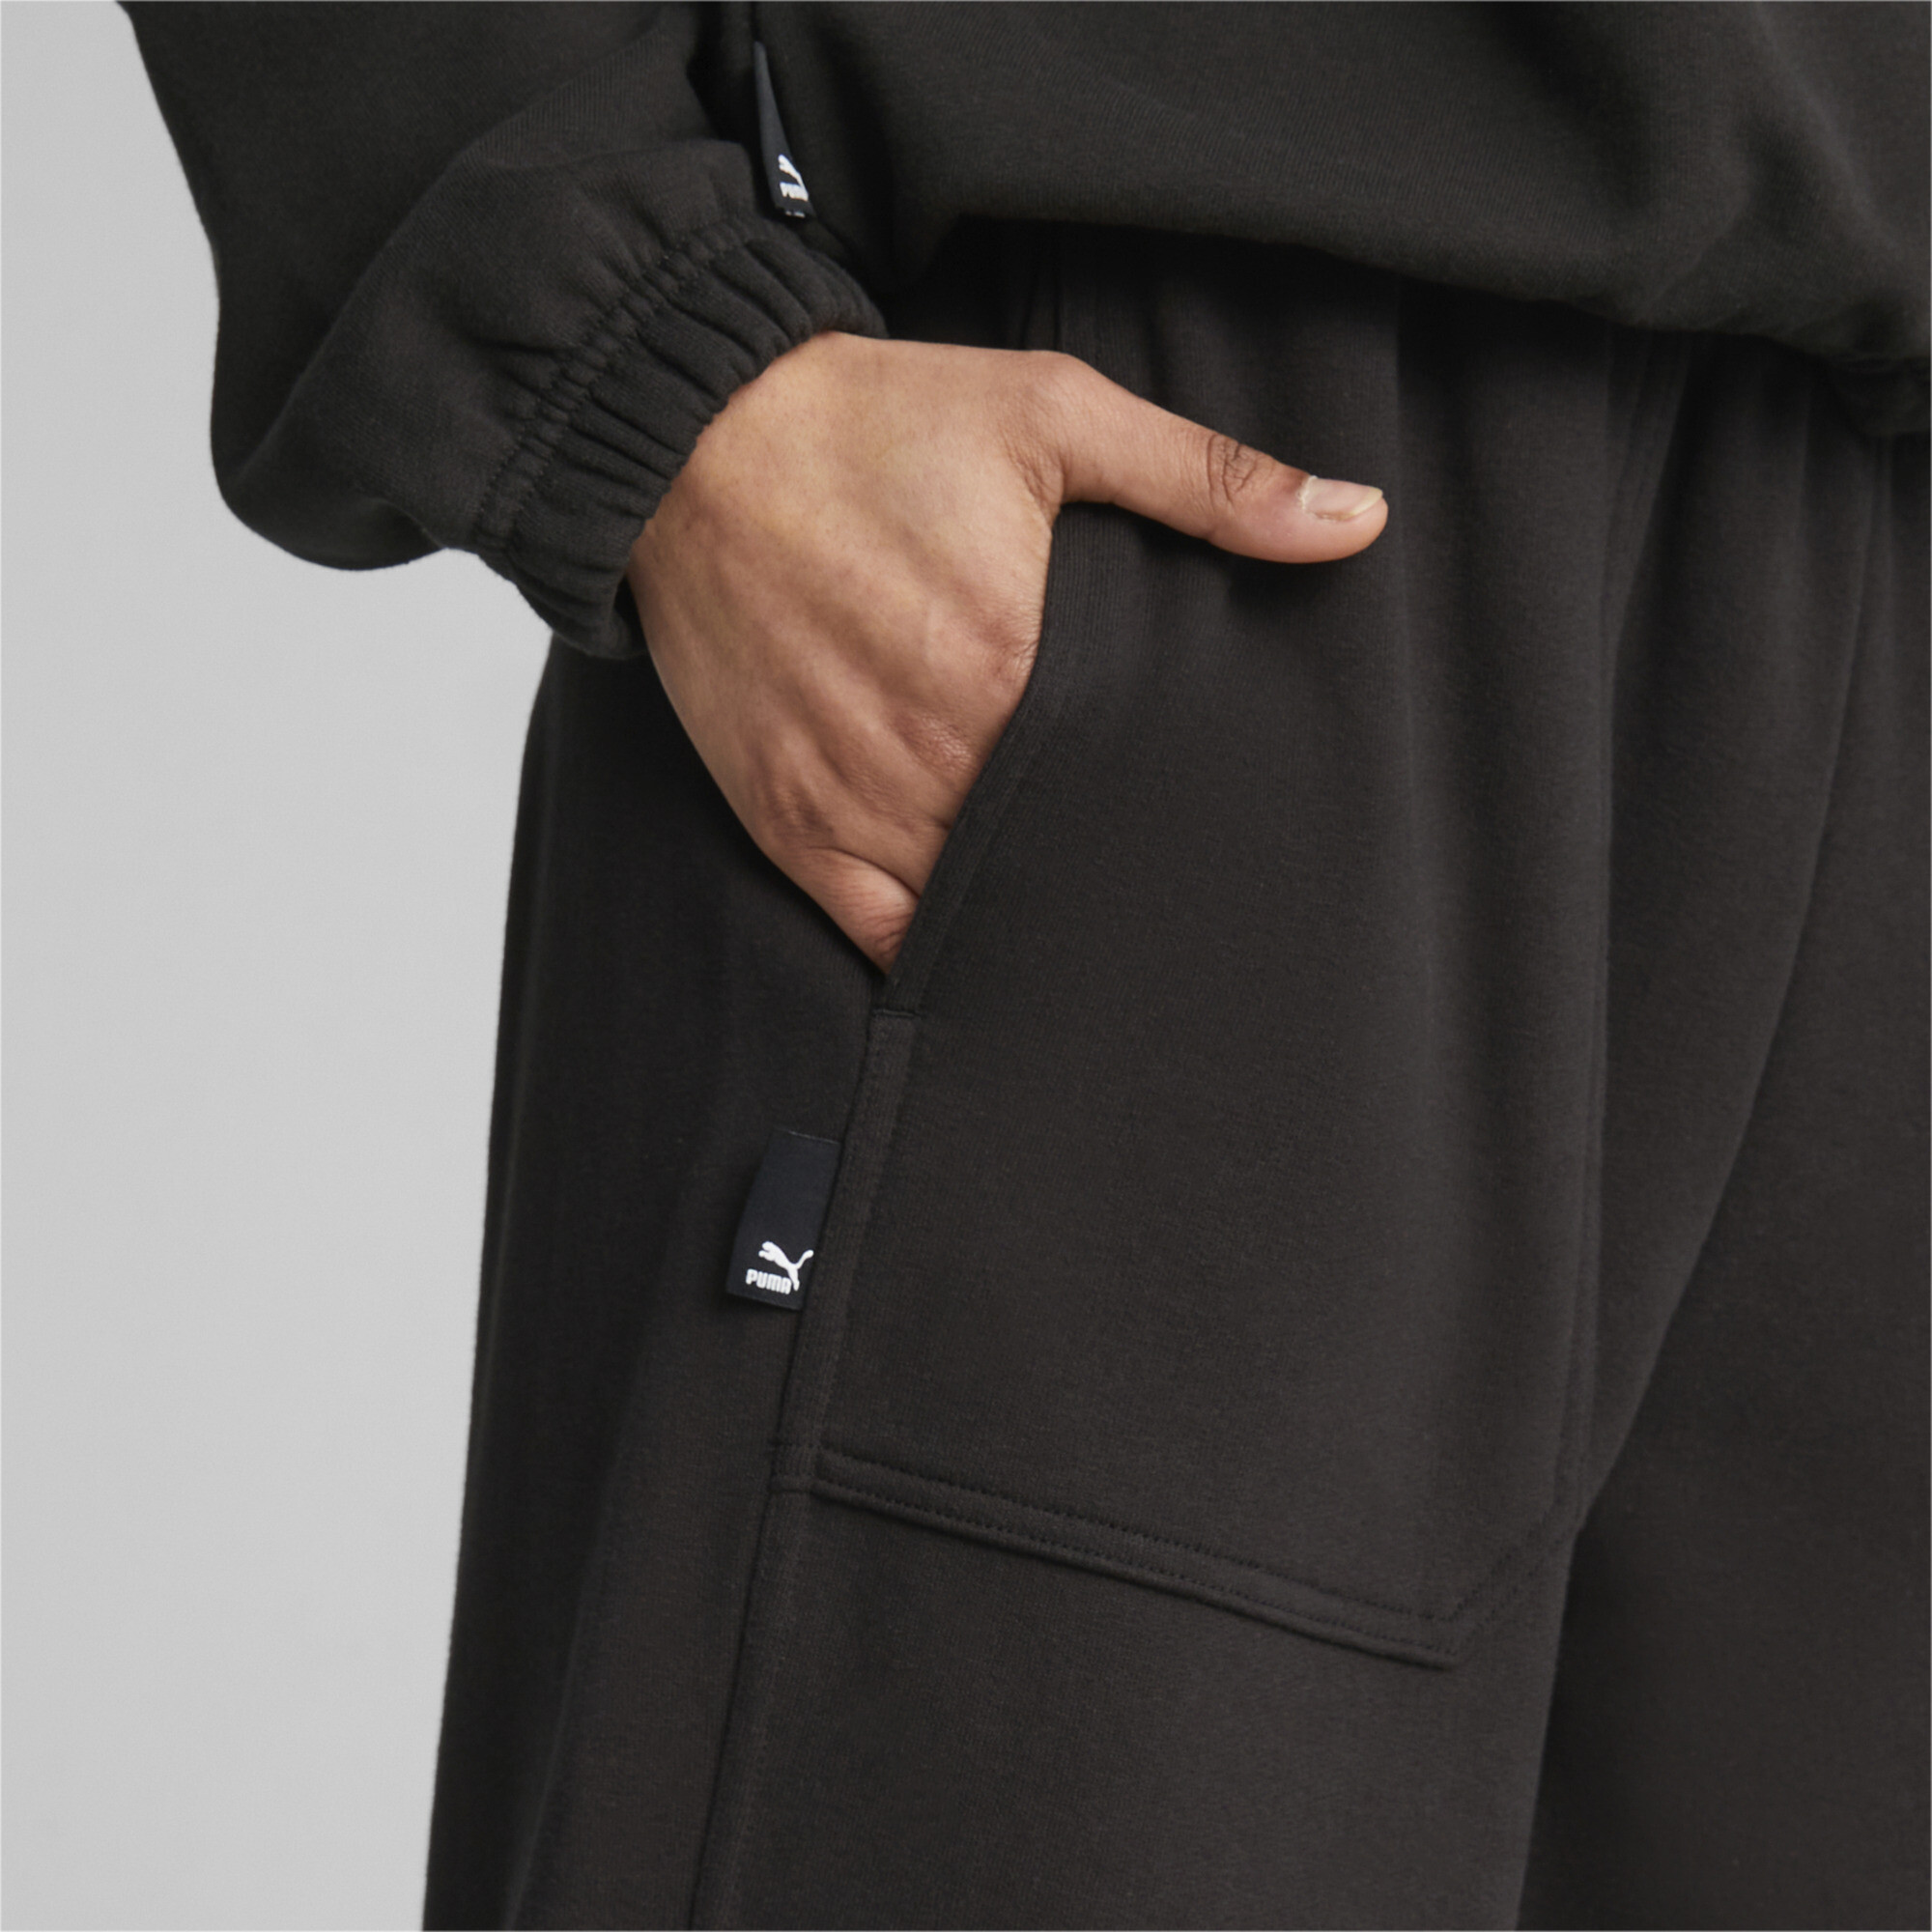 Women's PUMA DOWNTOWN Sweatpants In Black, Size Medium